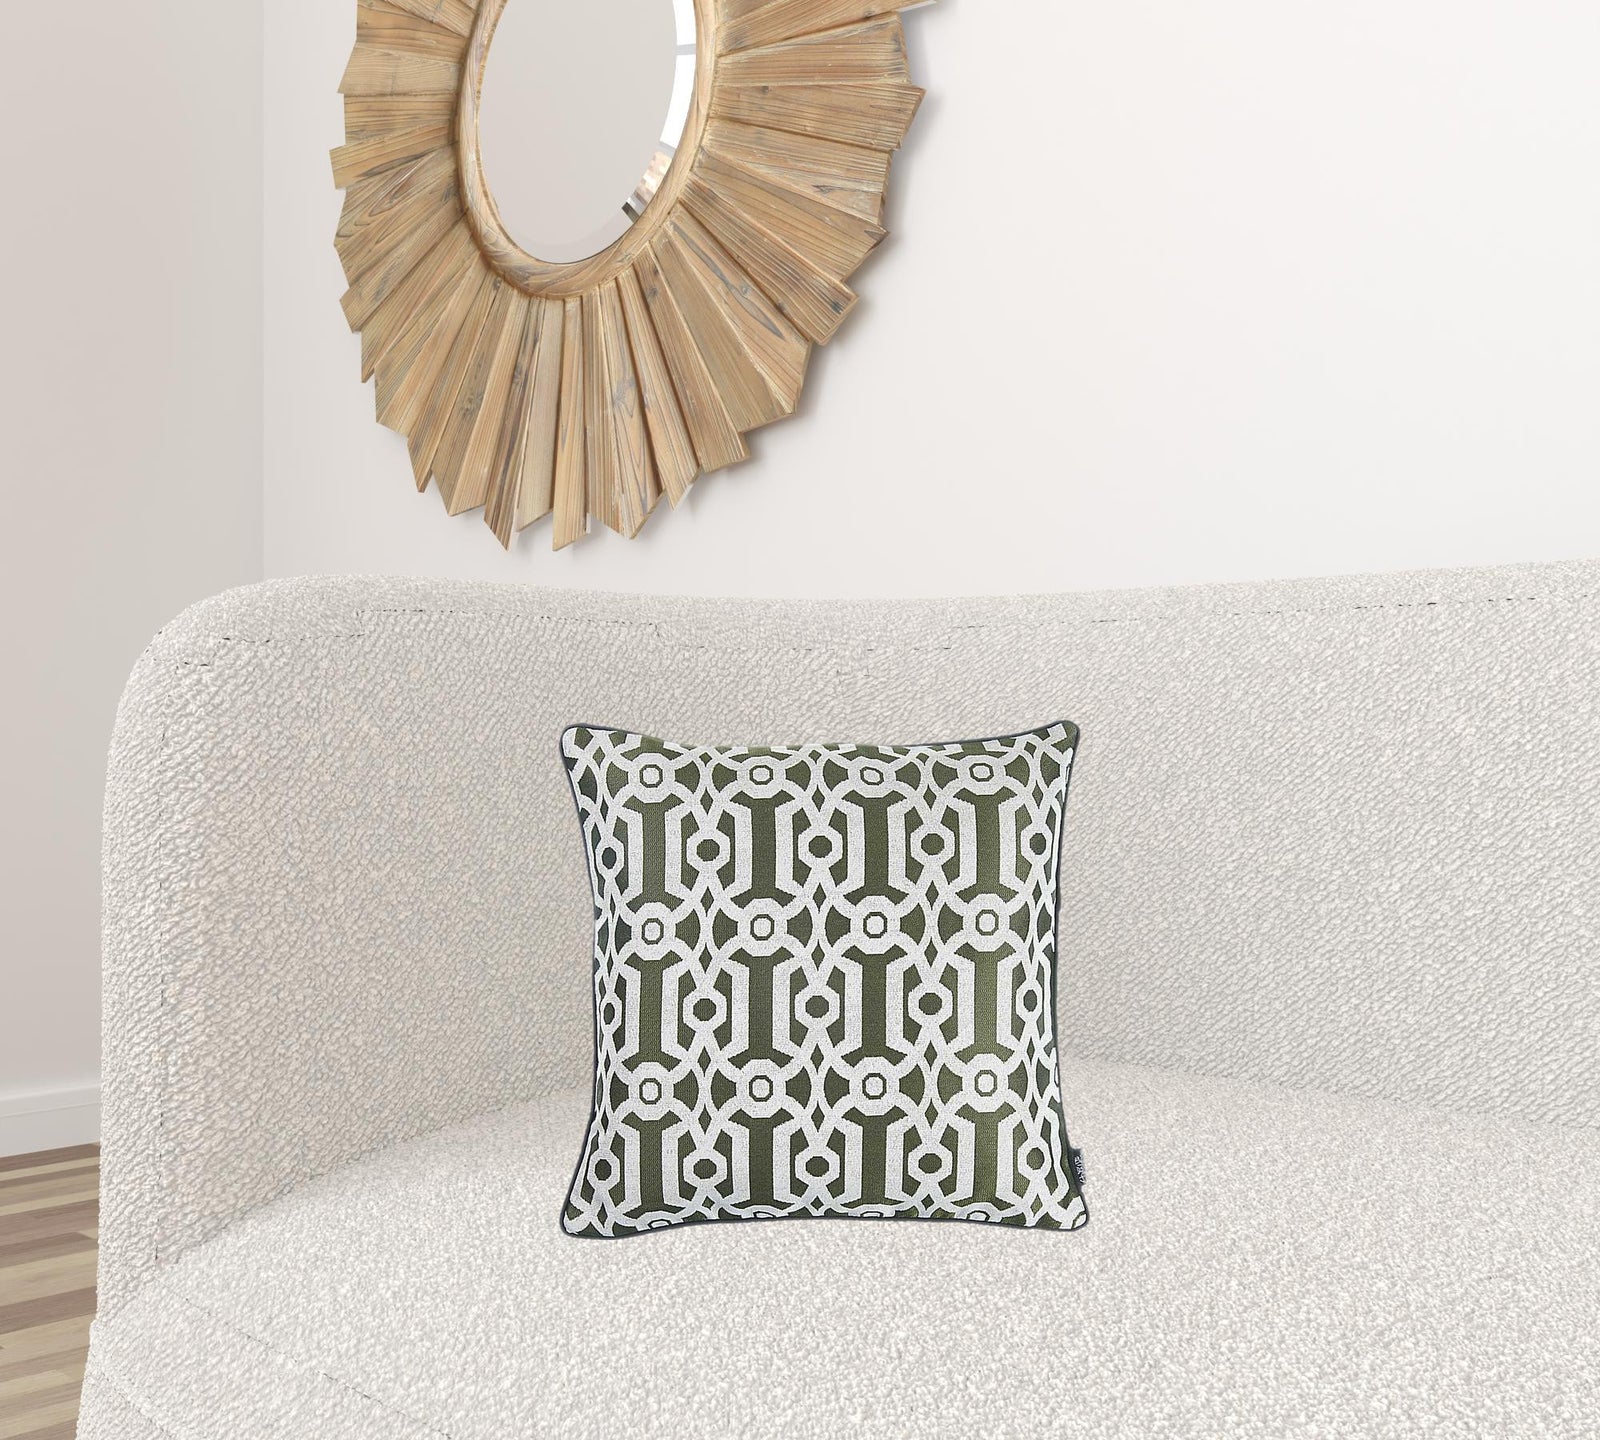 Khaki Green And White Jacquard Geo Decorative Throw Pillow Cover